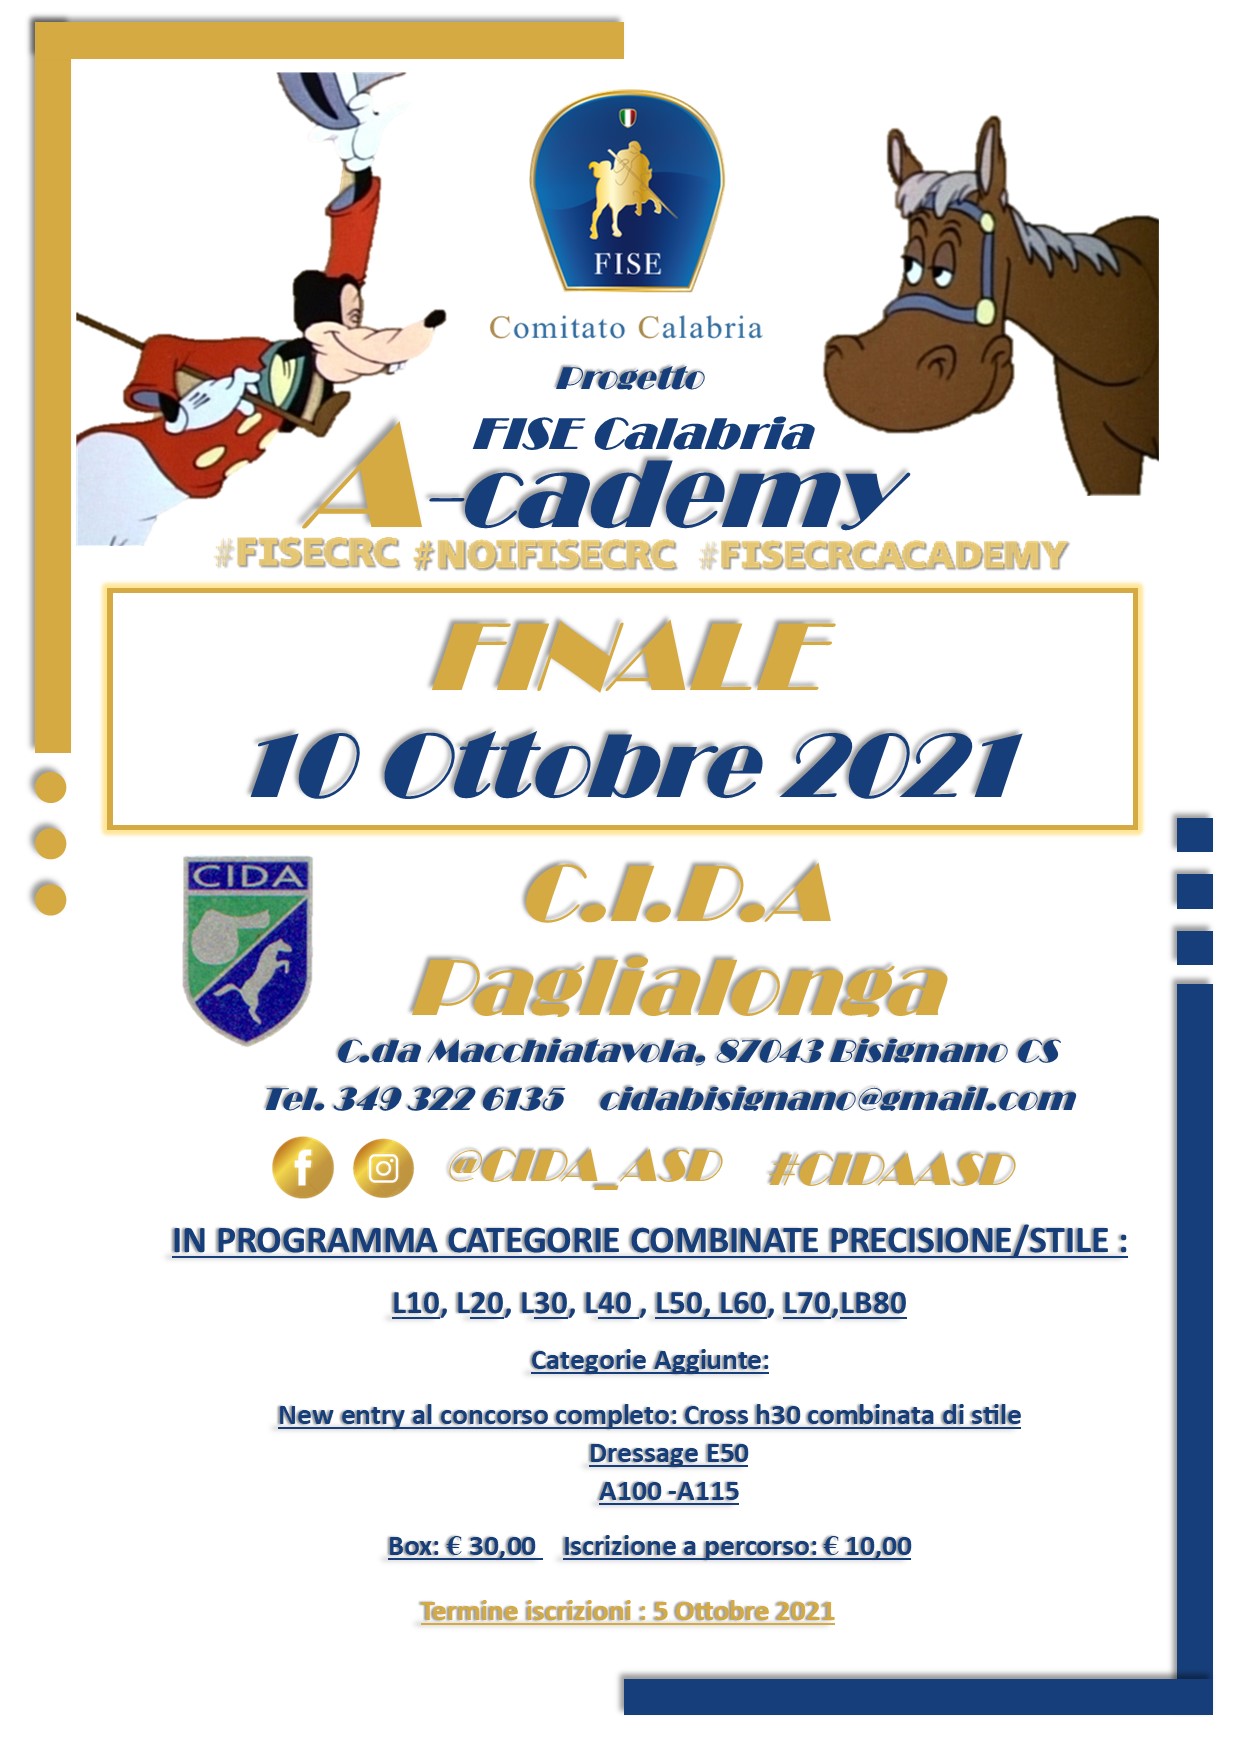 FIse Calabria A cademy Locandina finale 10 Ottobre CIDA